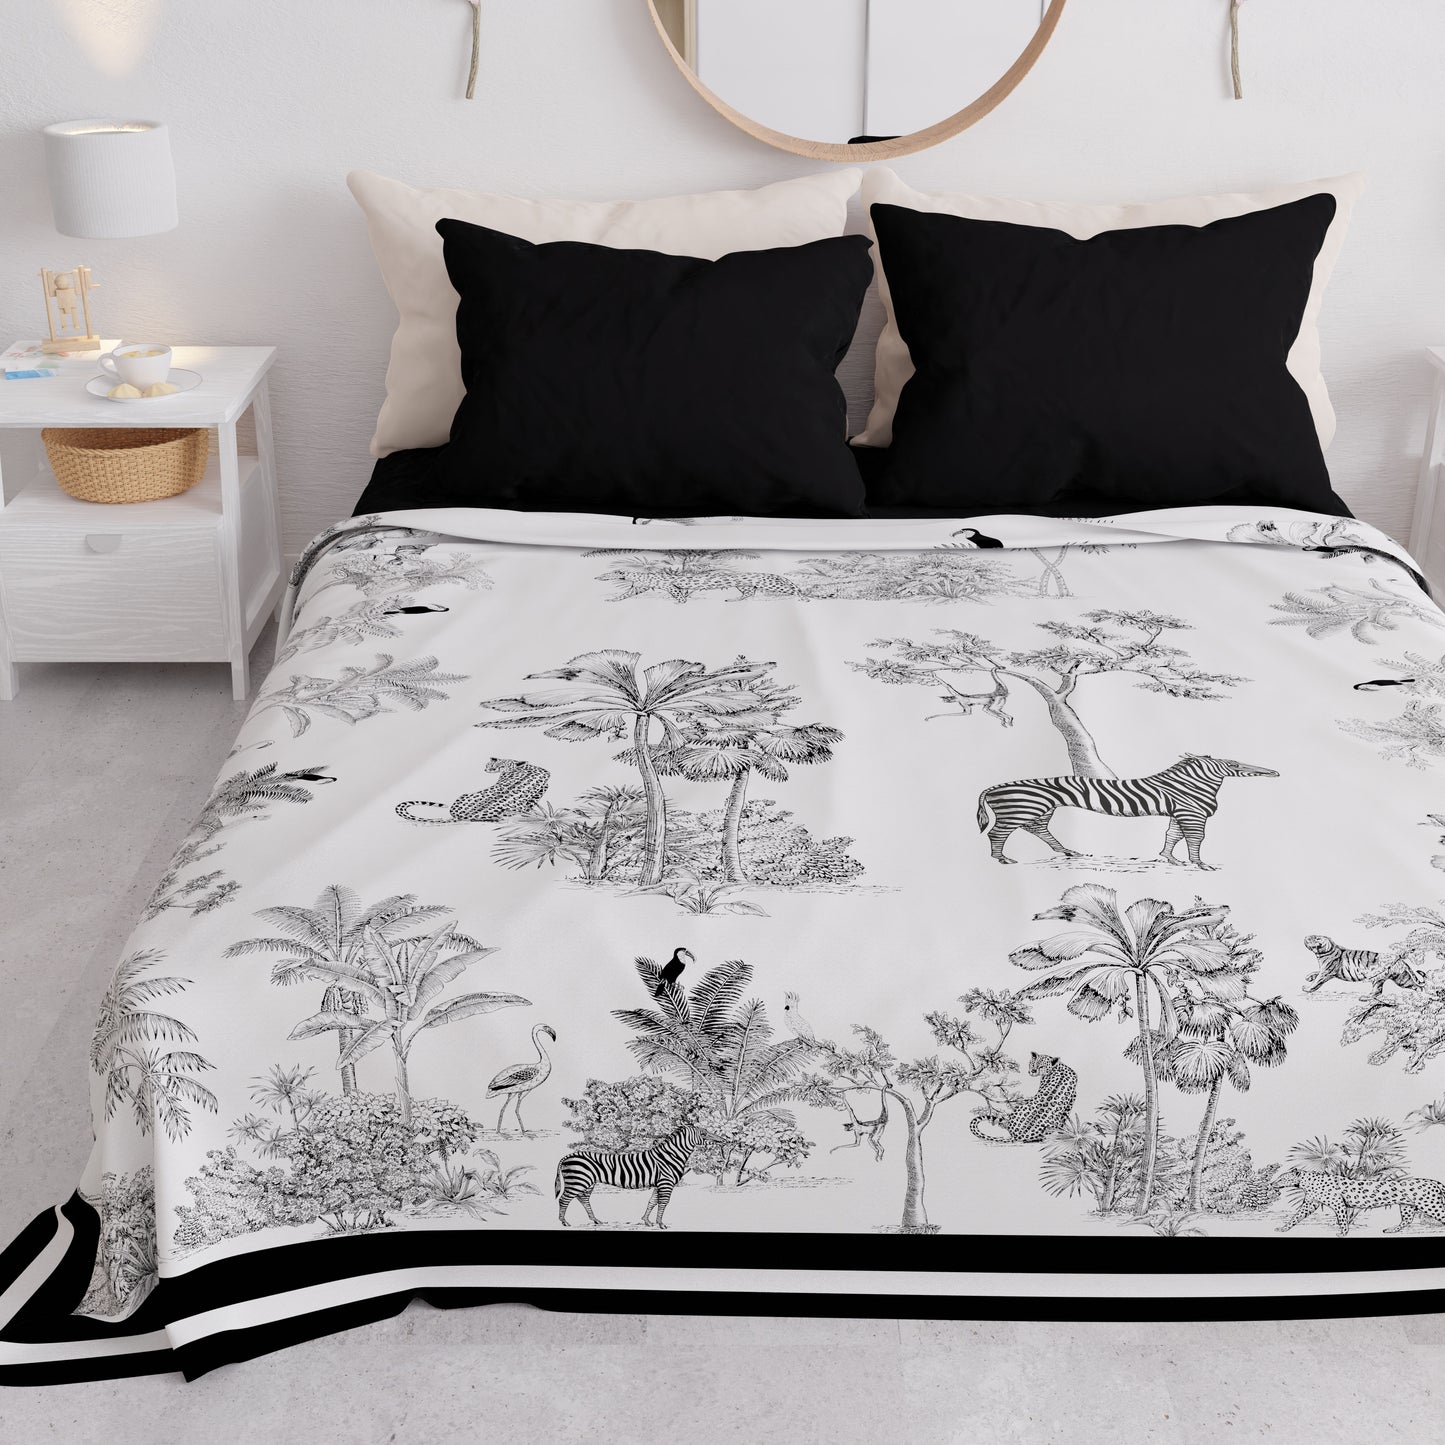 Summer Bedspread, Light Blanket, Bedspread Sheets, Animal Print 02